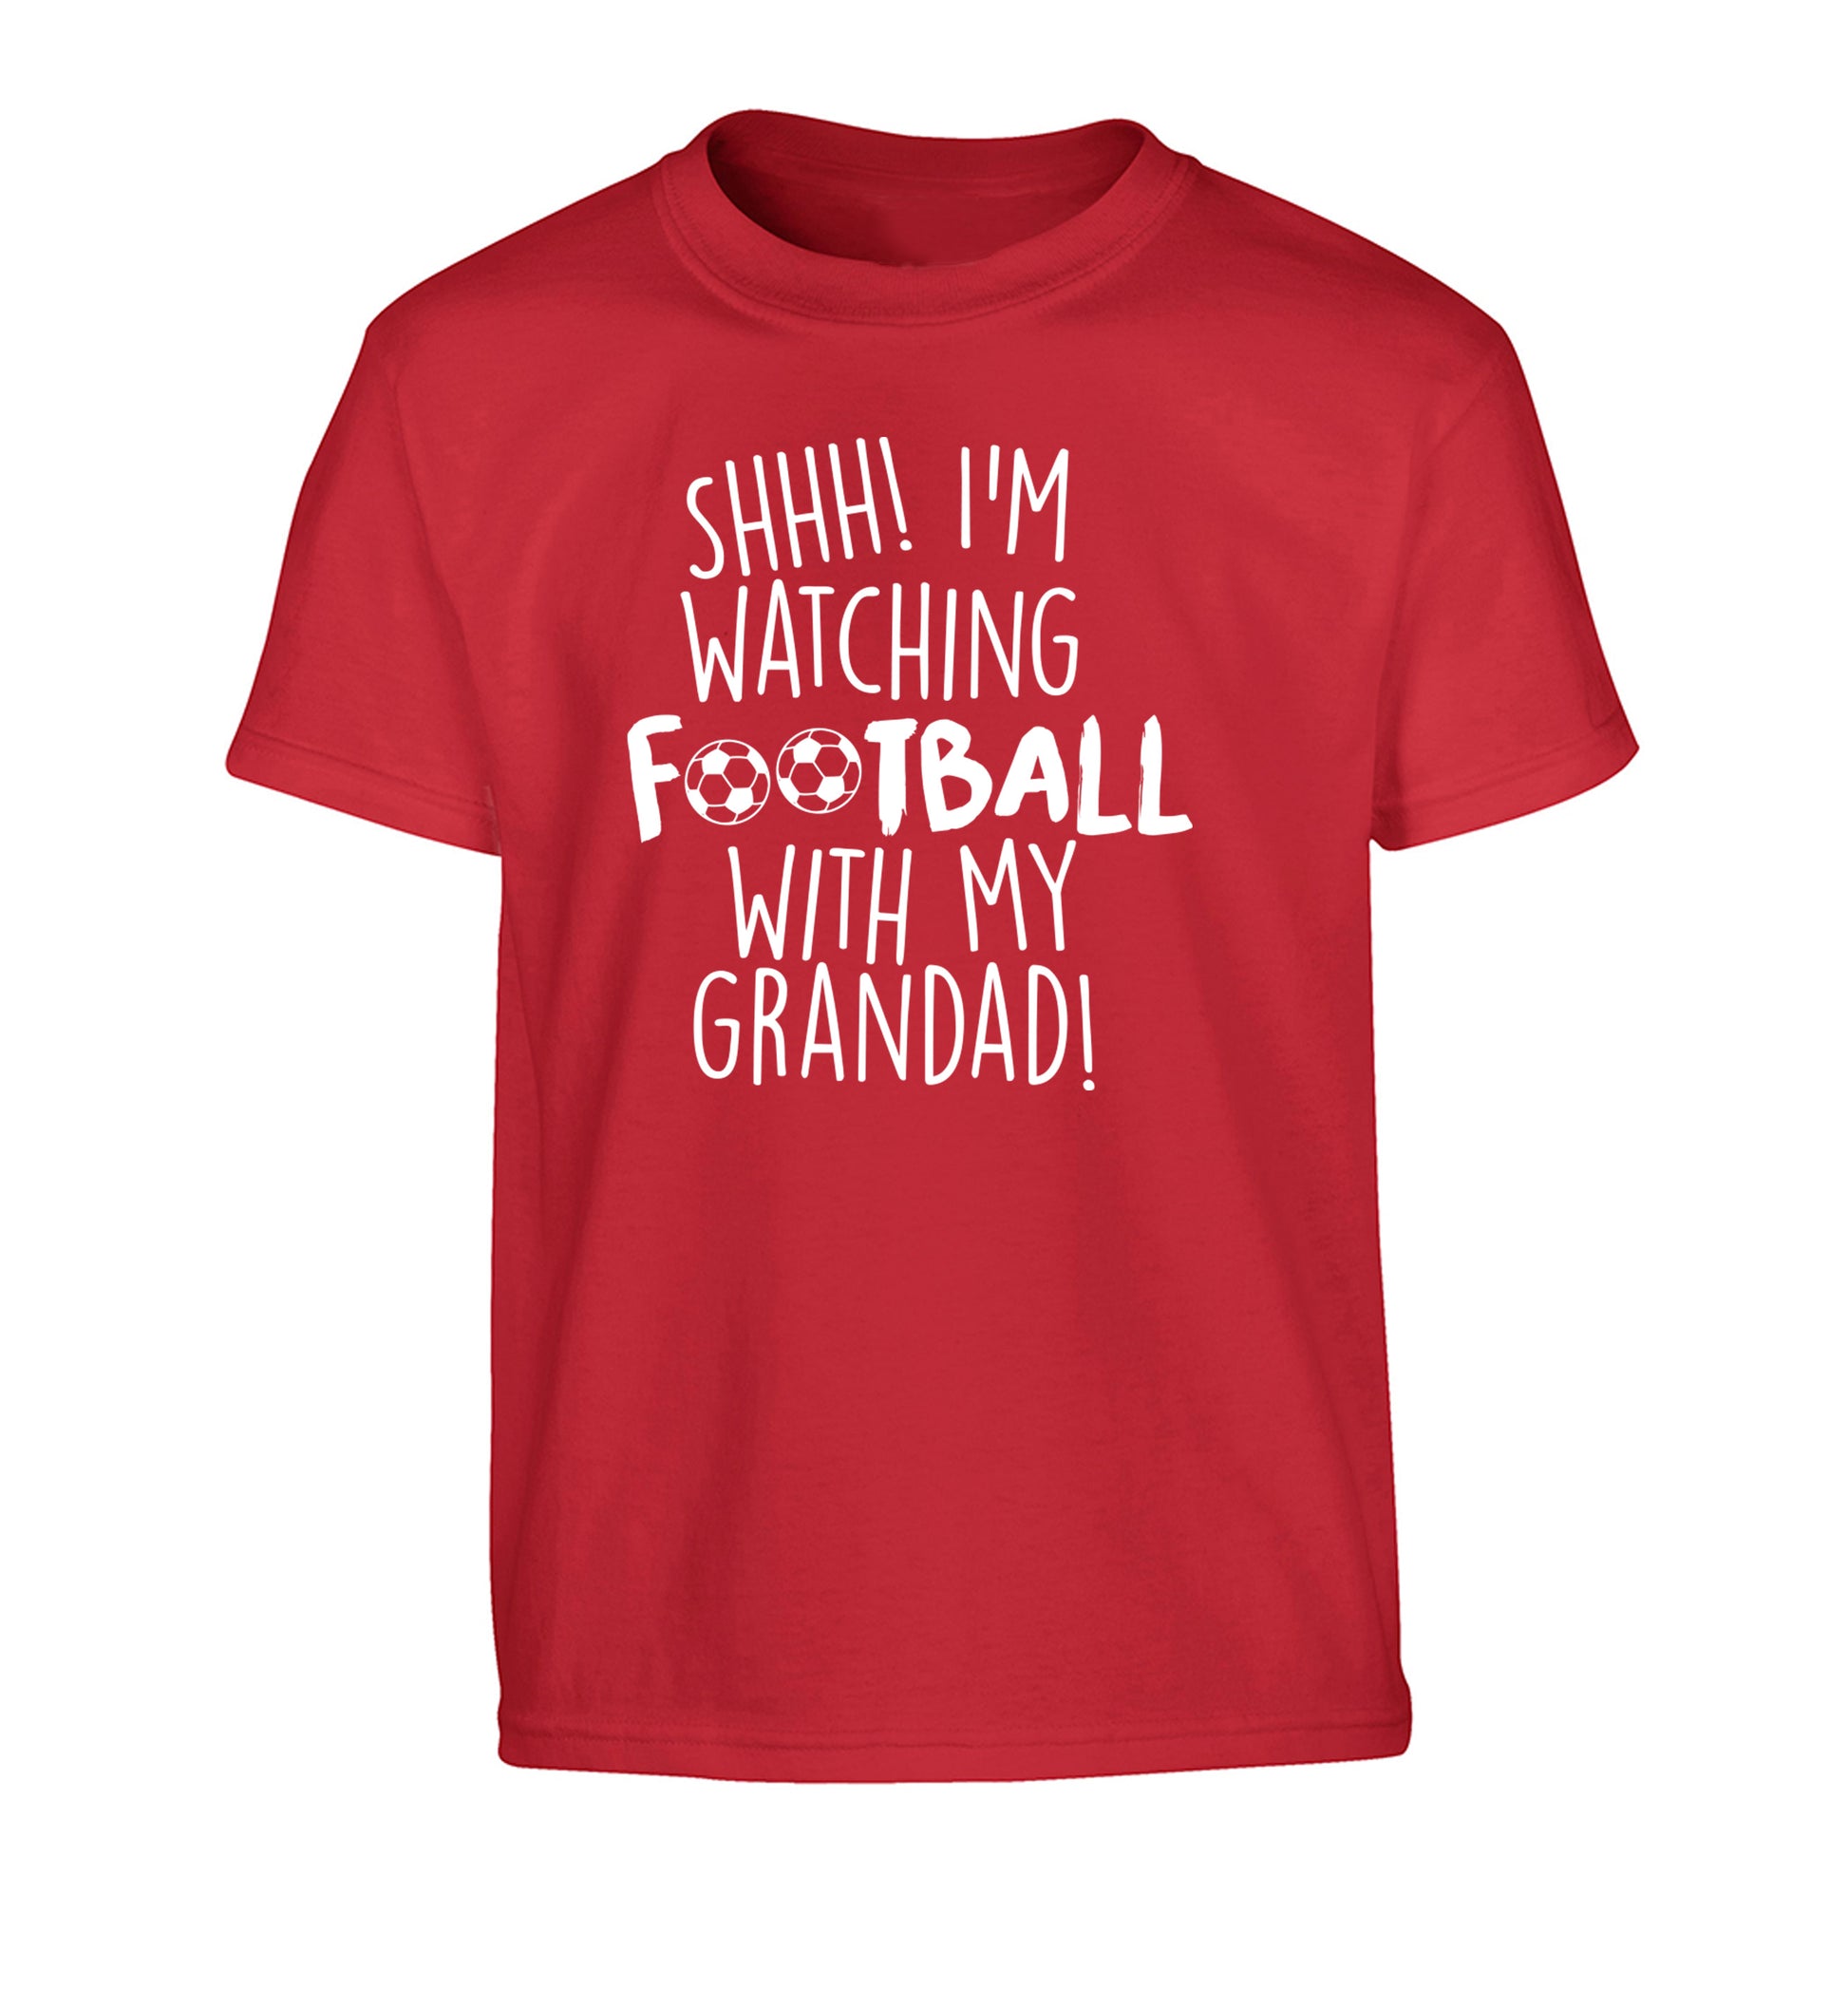 Shhh I'm watching football with my grandad Children's red Tshirt 12-14 Years